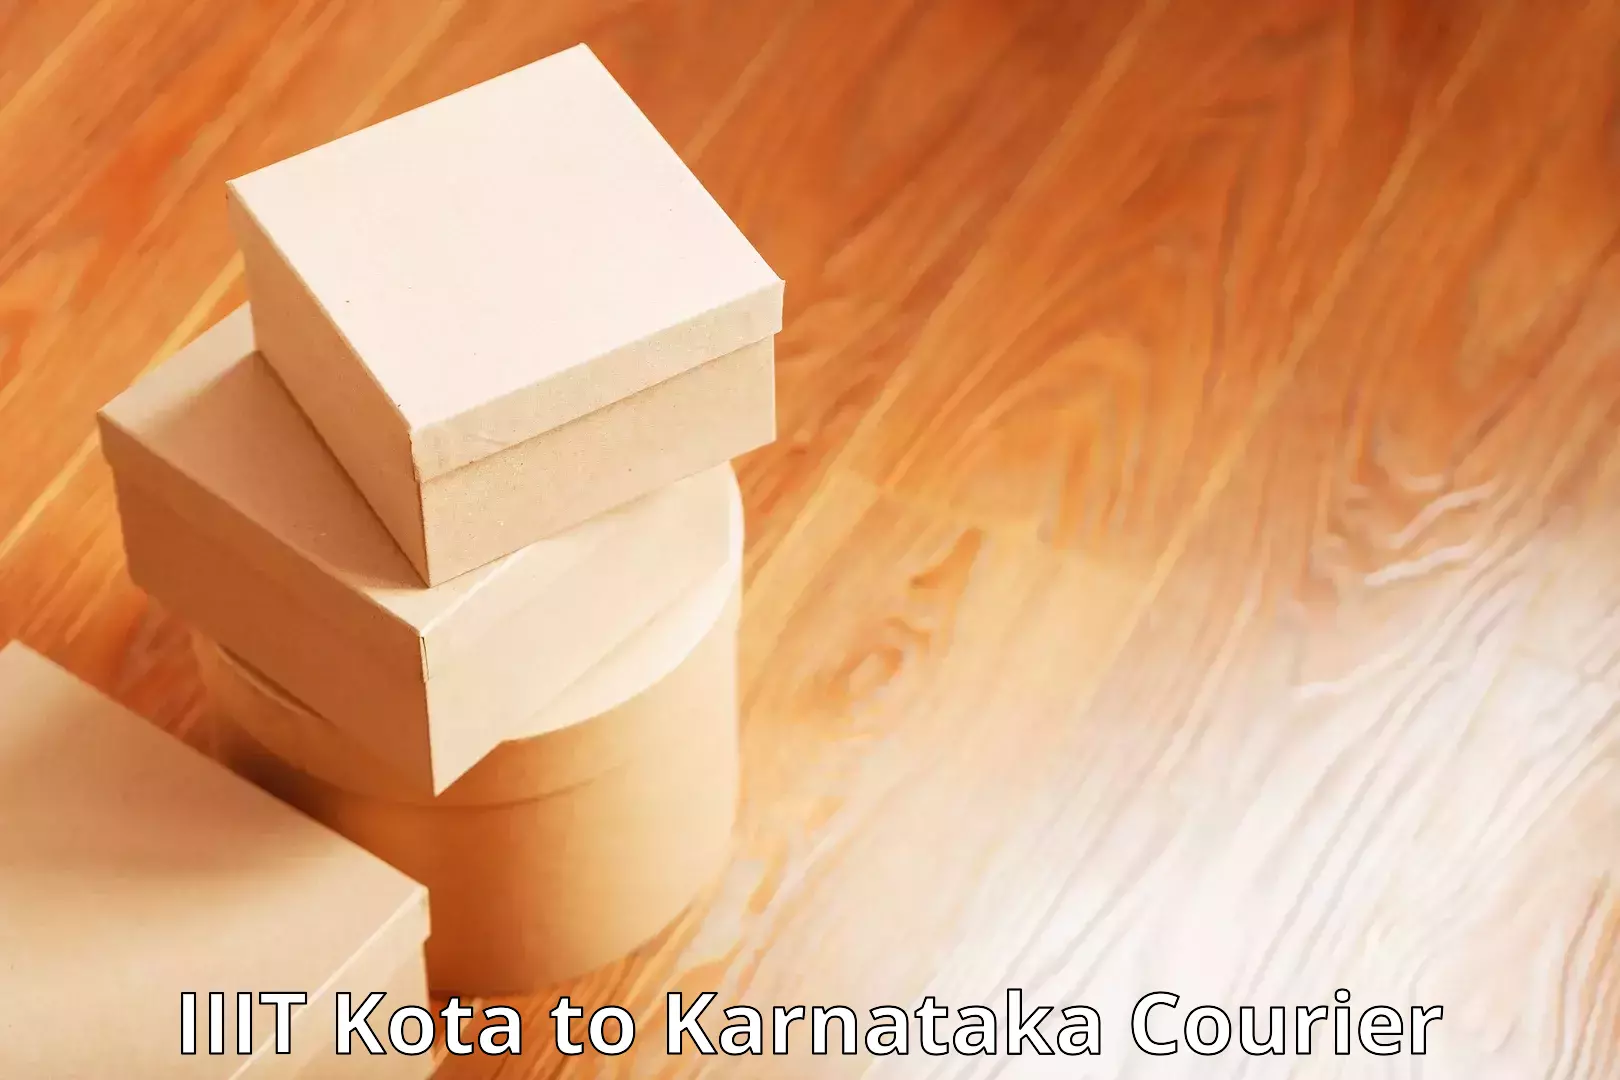 Corporate courier solutions IIIT Kota to Karnataka